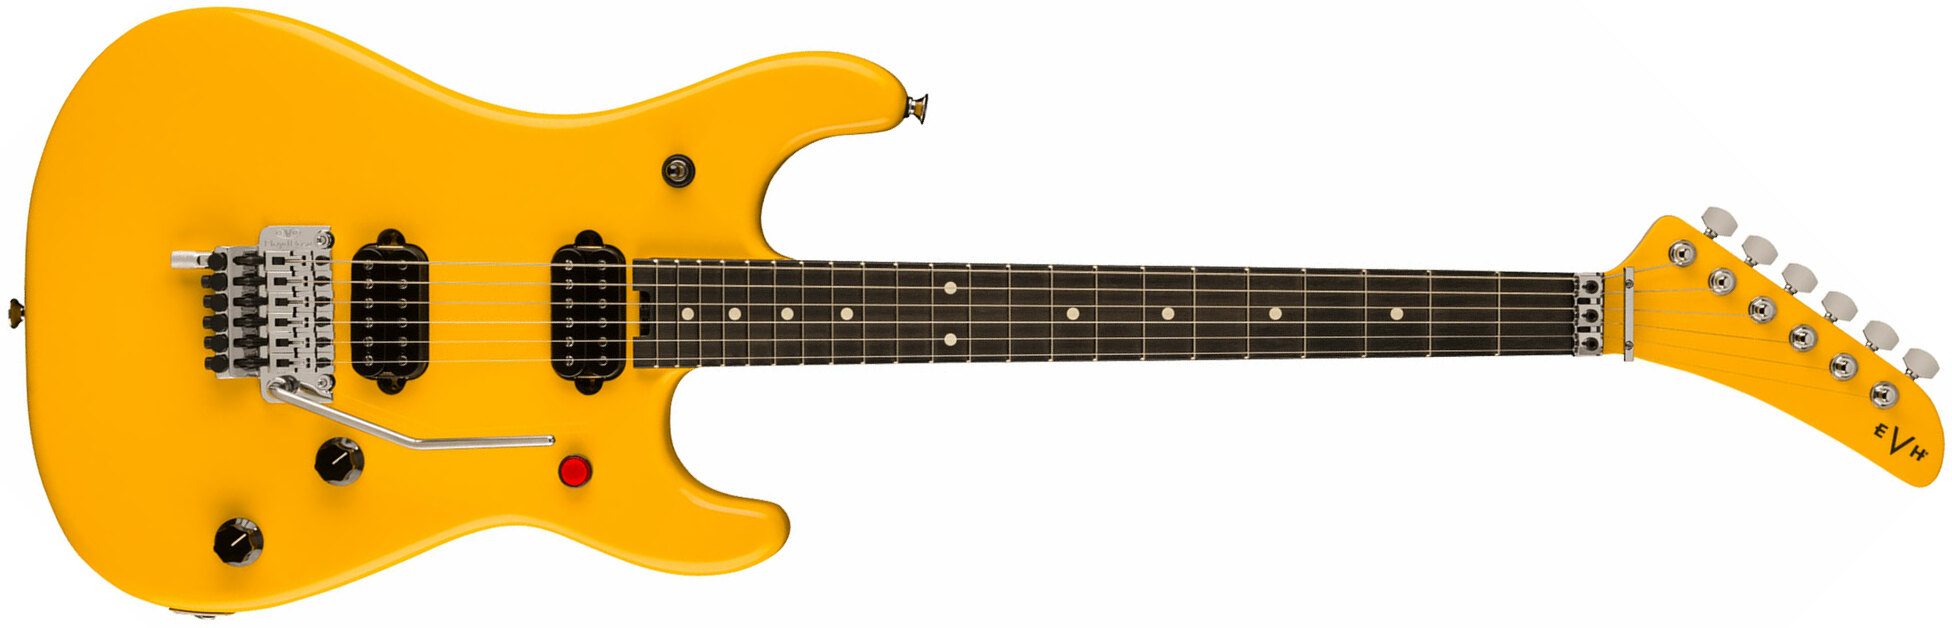 Evh 5150 Standard Mex 2h Fr Eb - Evh Yellow - Str shape electric guitar - Main picture